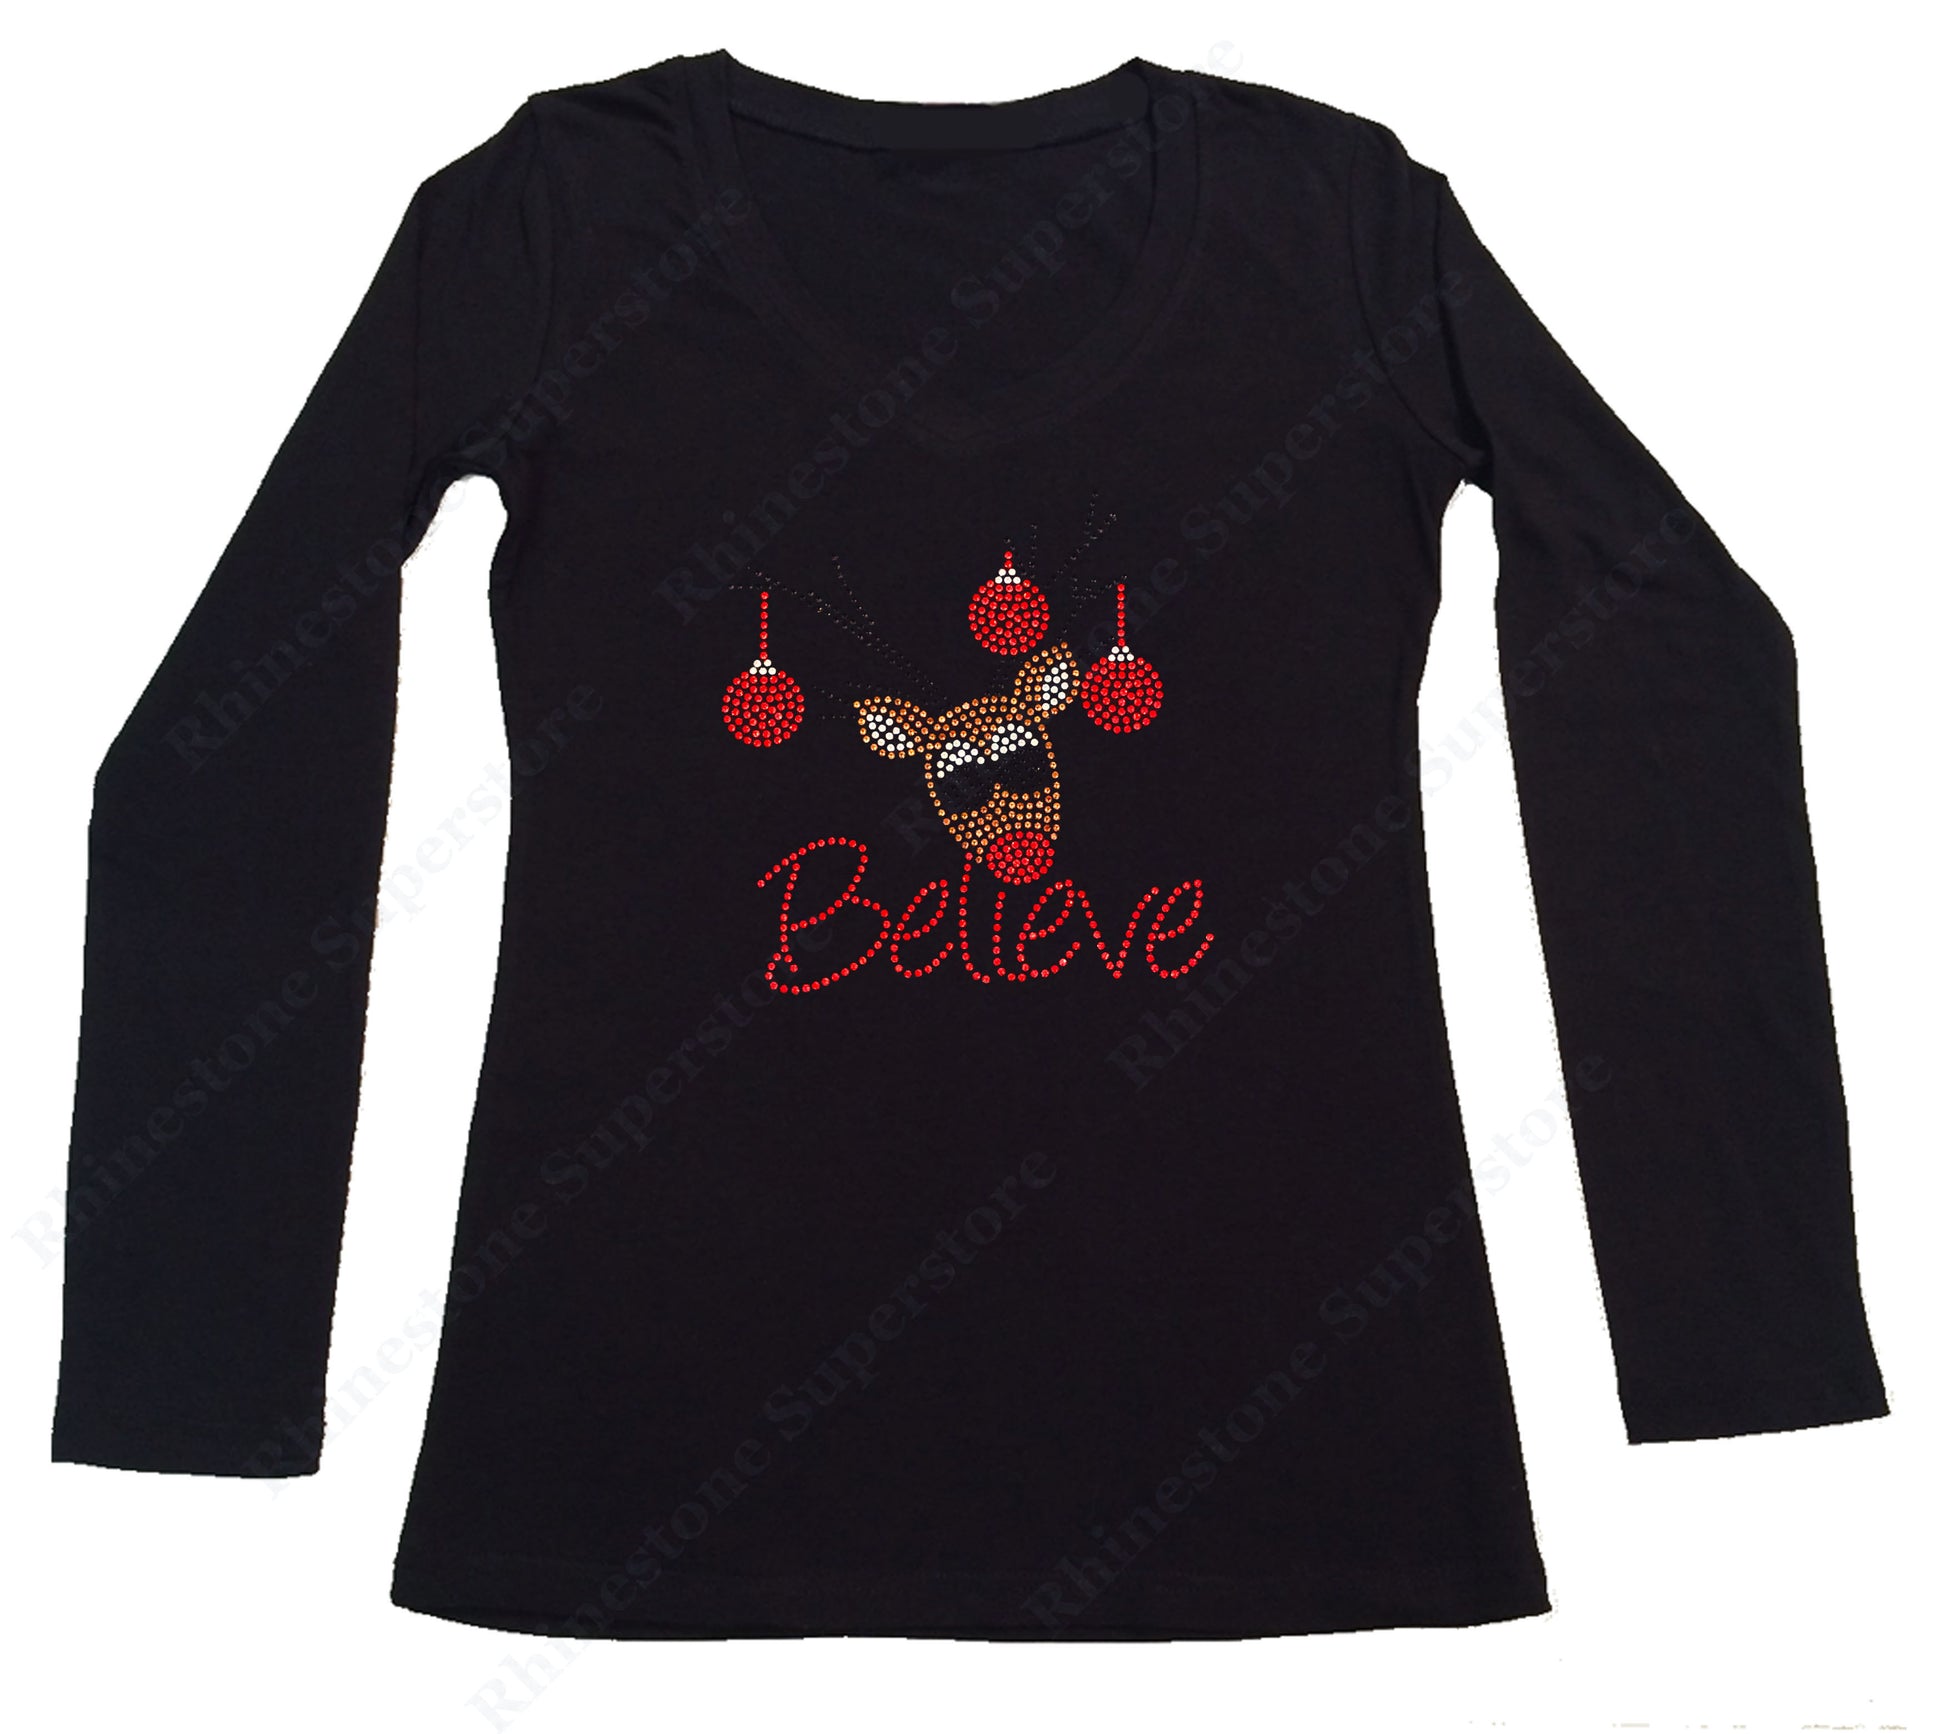 Womens T-shirt with Believe Reindeer in Rhinestuds long sleeve